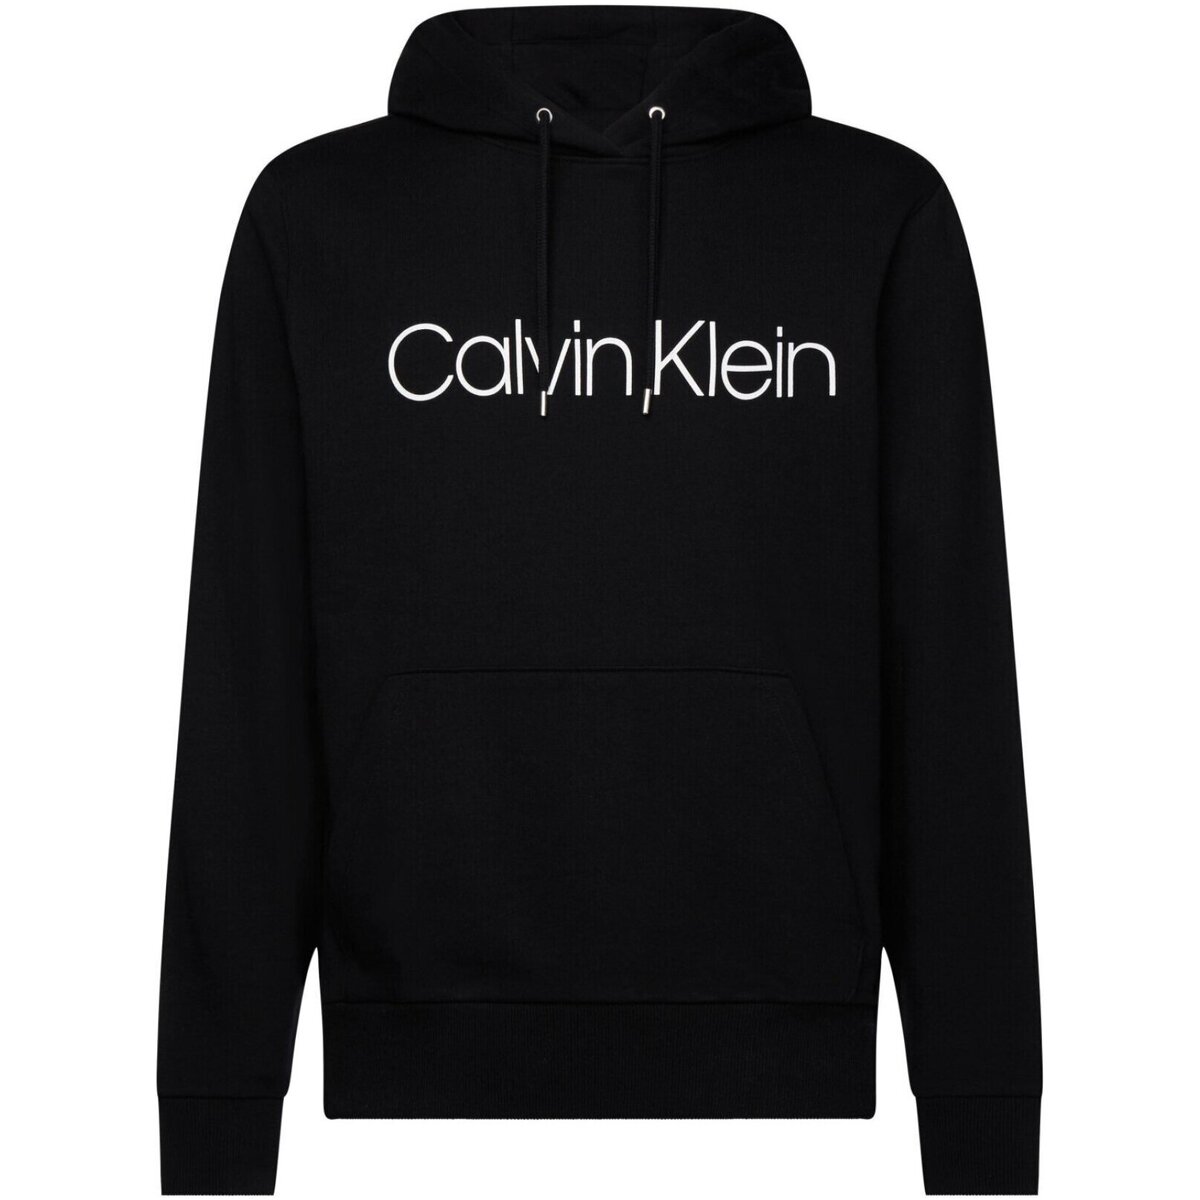 Ruhák Férfi Pulóverek Calvin Klein Jeans K10K104060 Fekete 